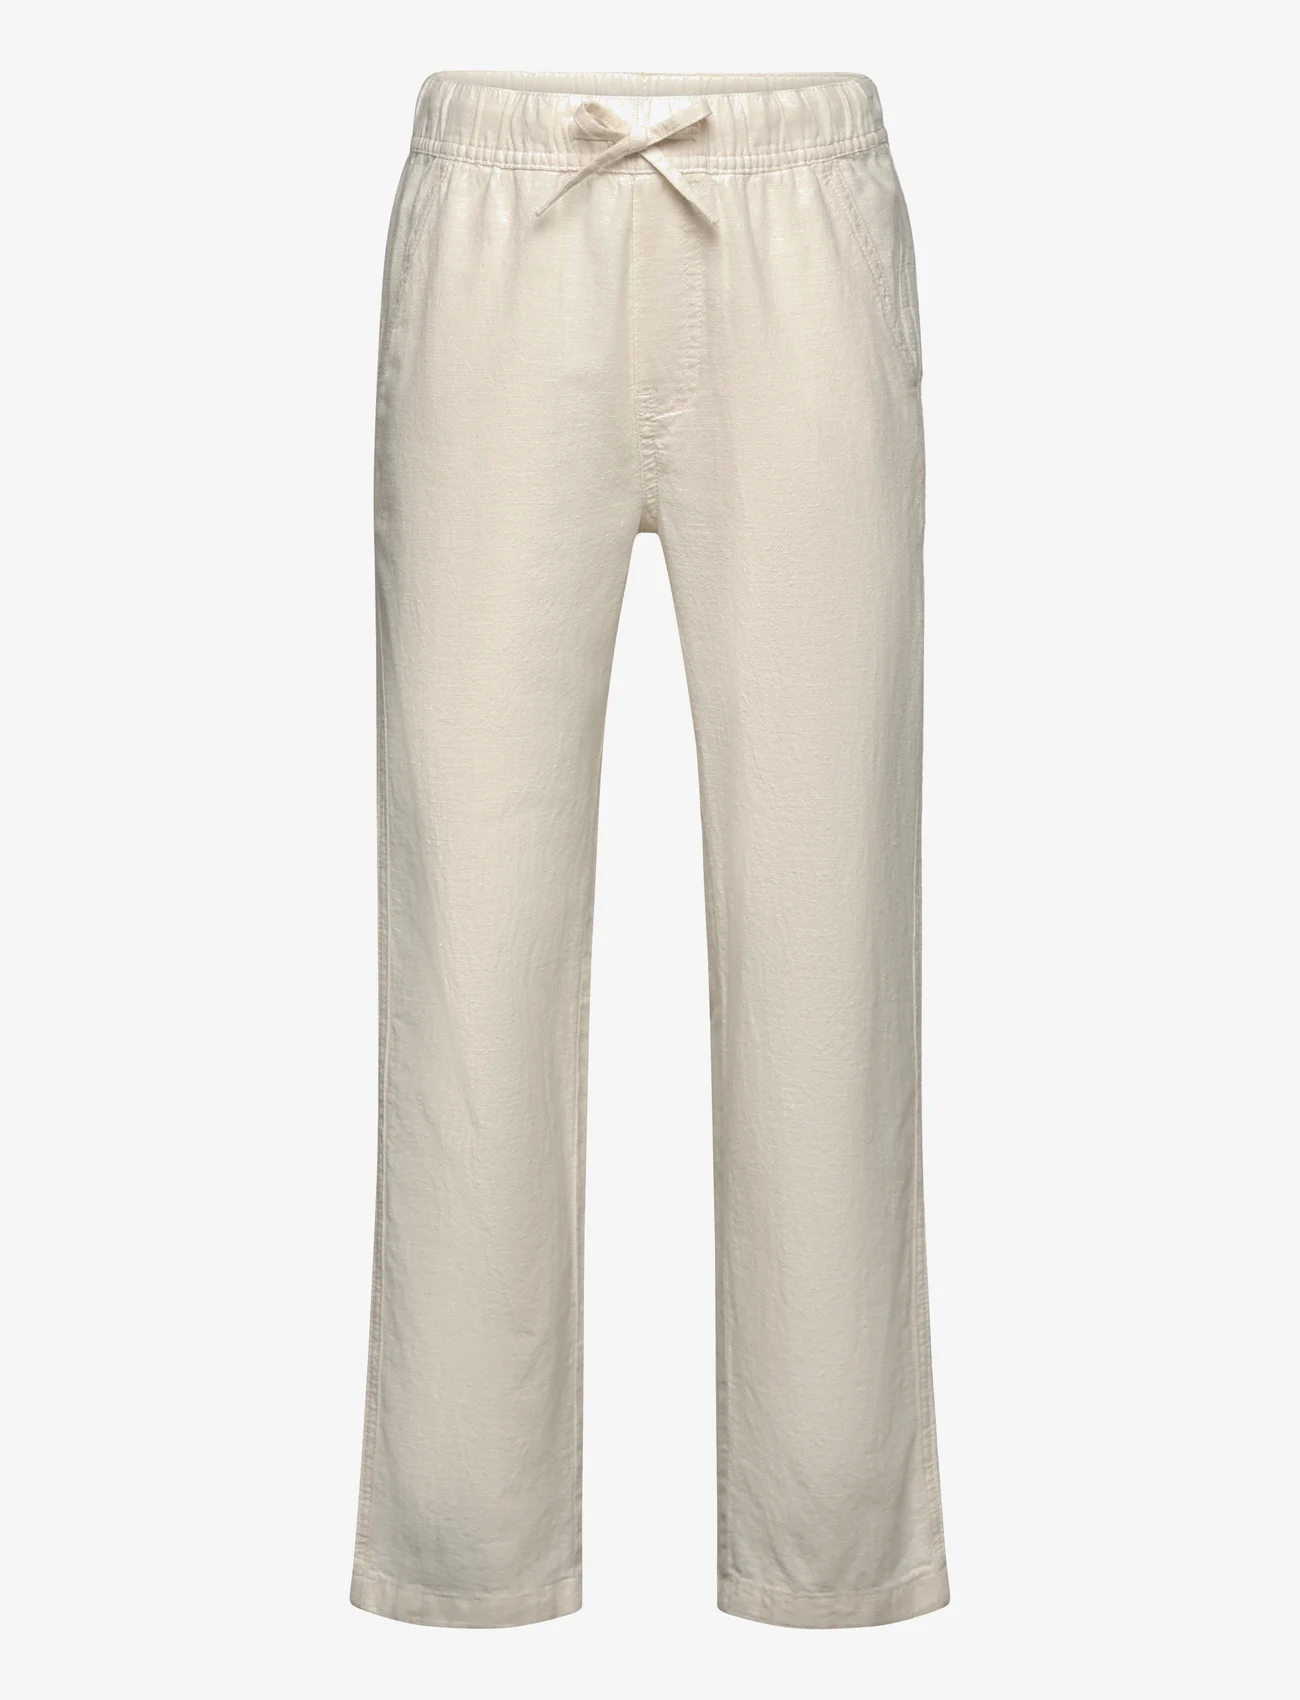 Lindex - Trousers linen blend - spodnie - light beige - 1